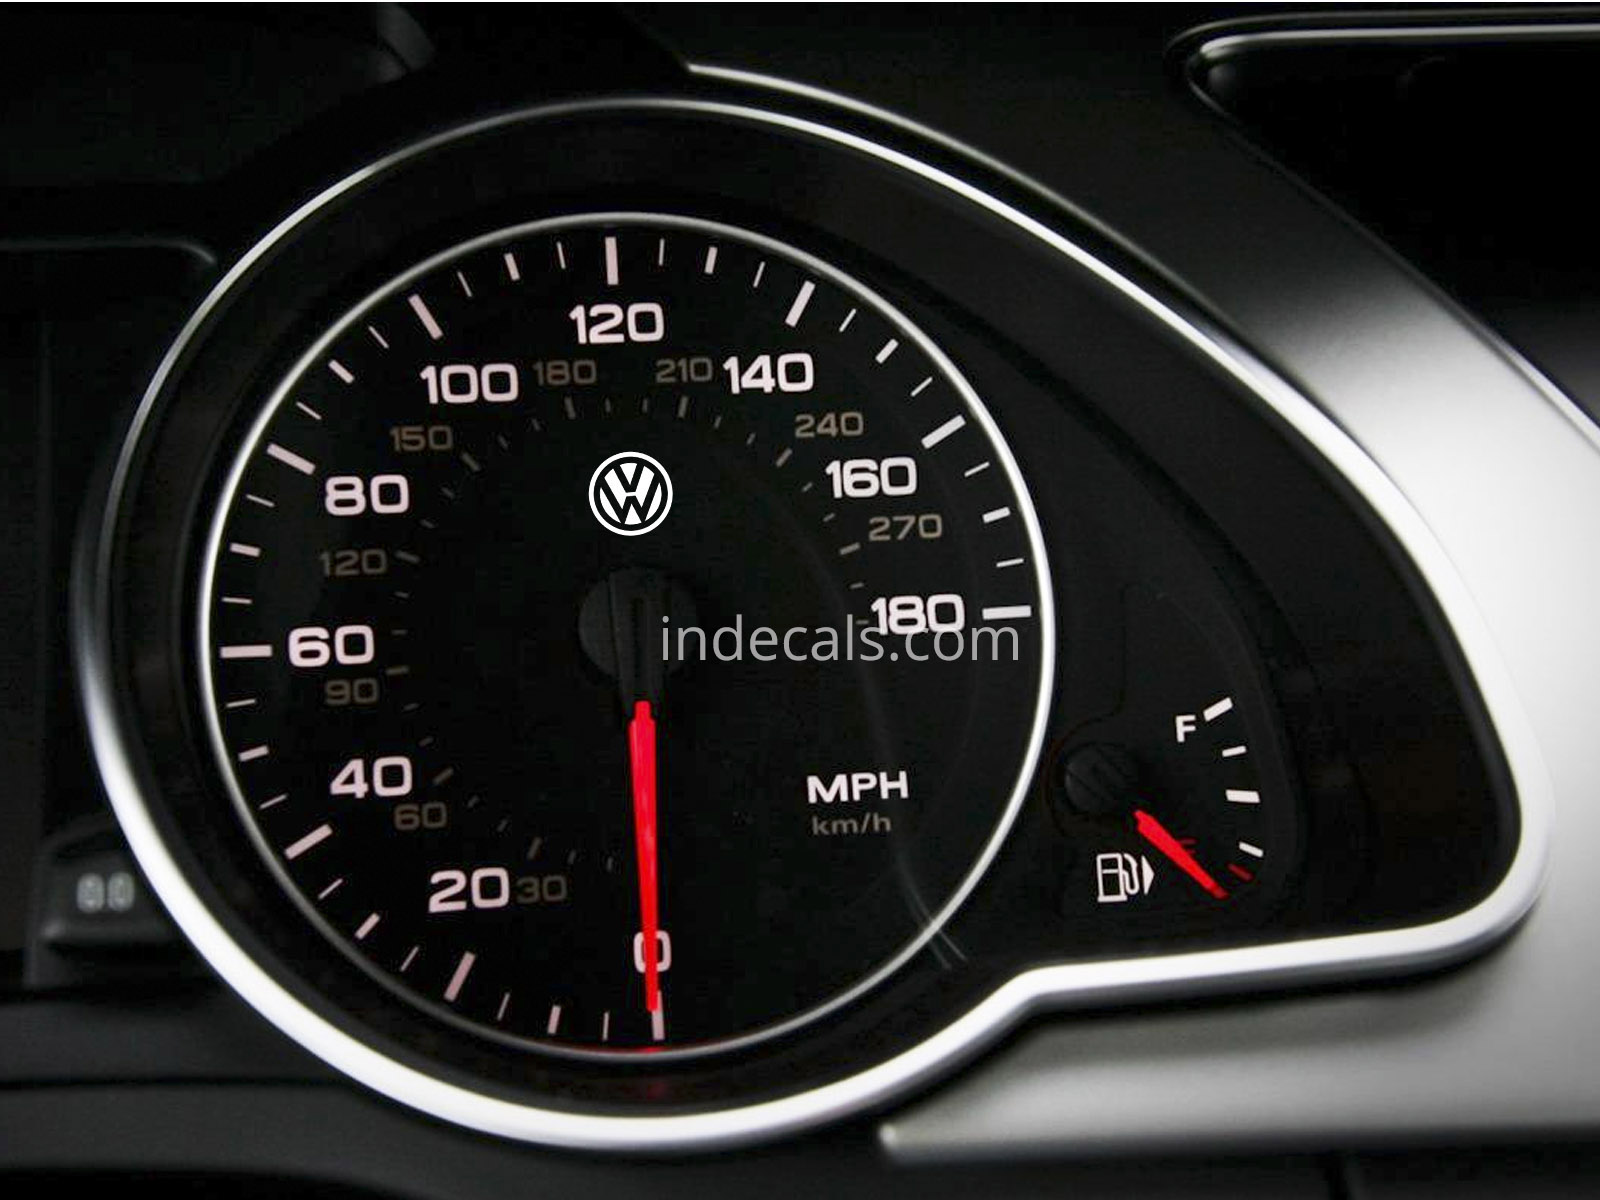 3 x Volkswagen Stickers for Speedometer - White